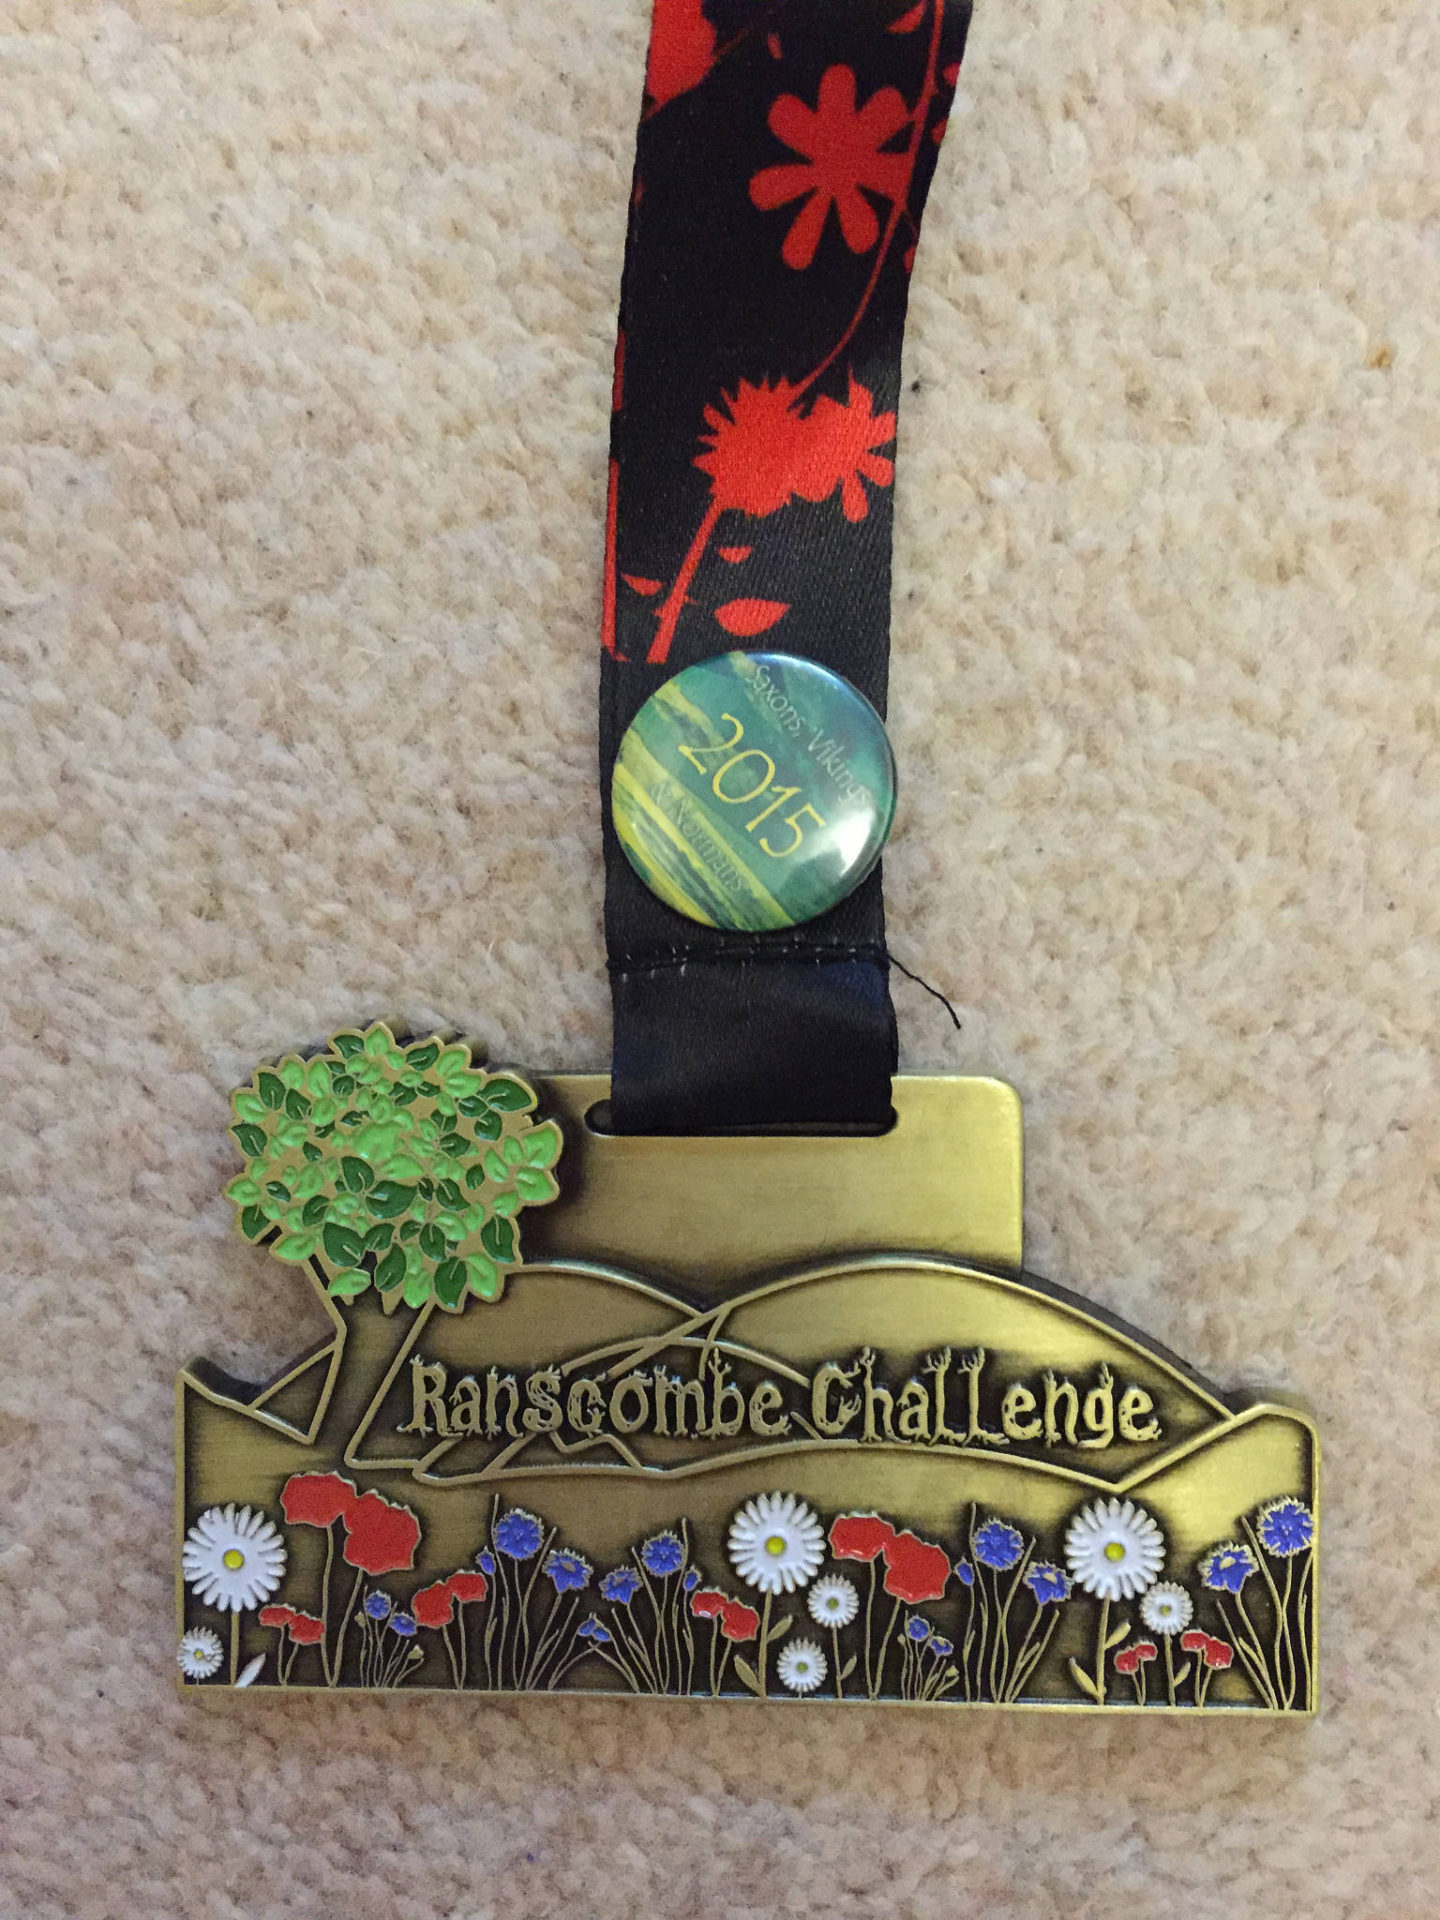 image - Ranscombe Summer Challenge Medal